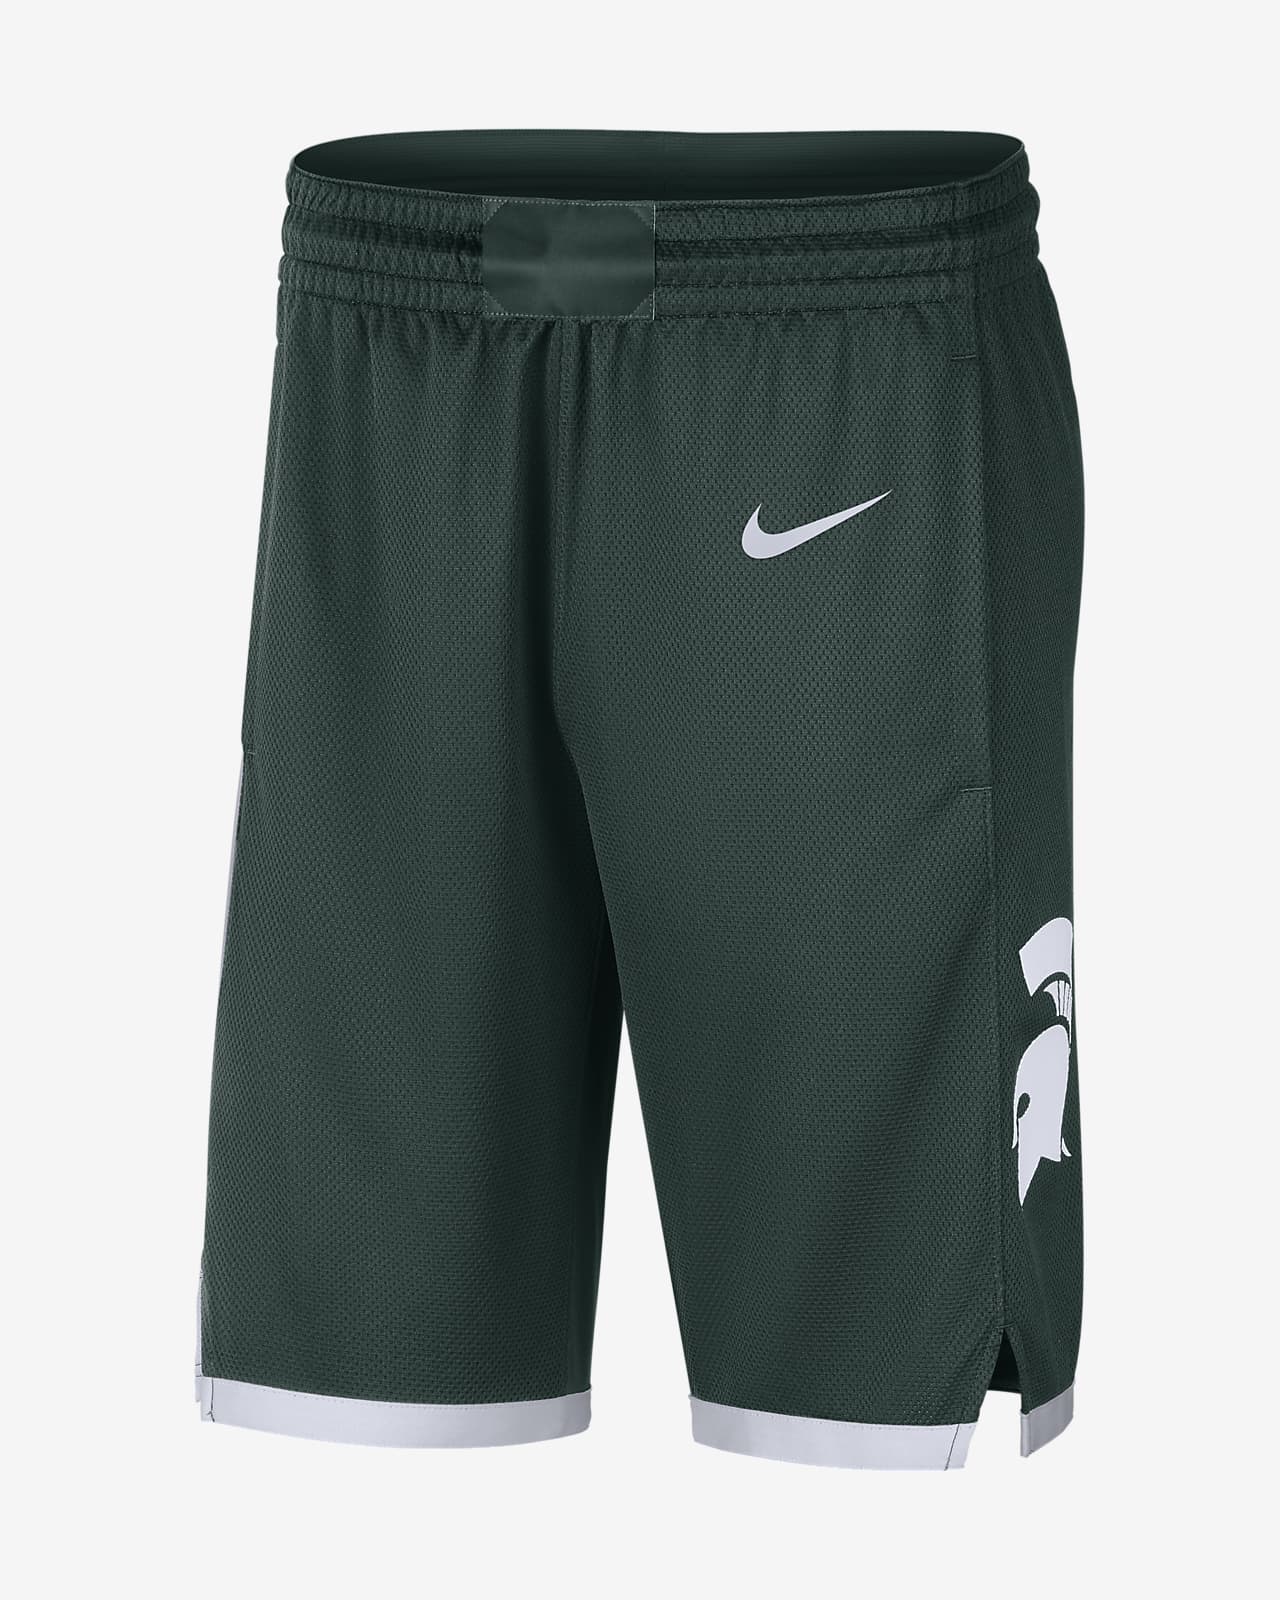 Nike College Dri-FIT (Michigan State) Men's Basketball Shorts